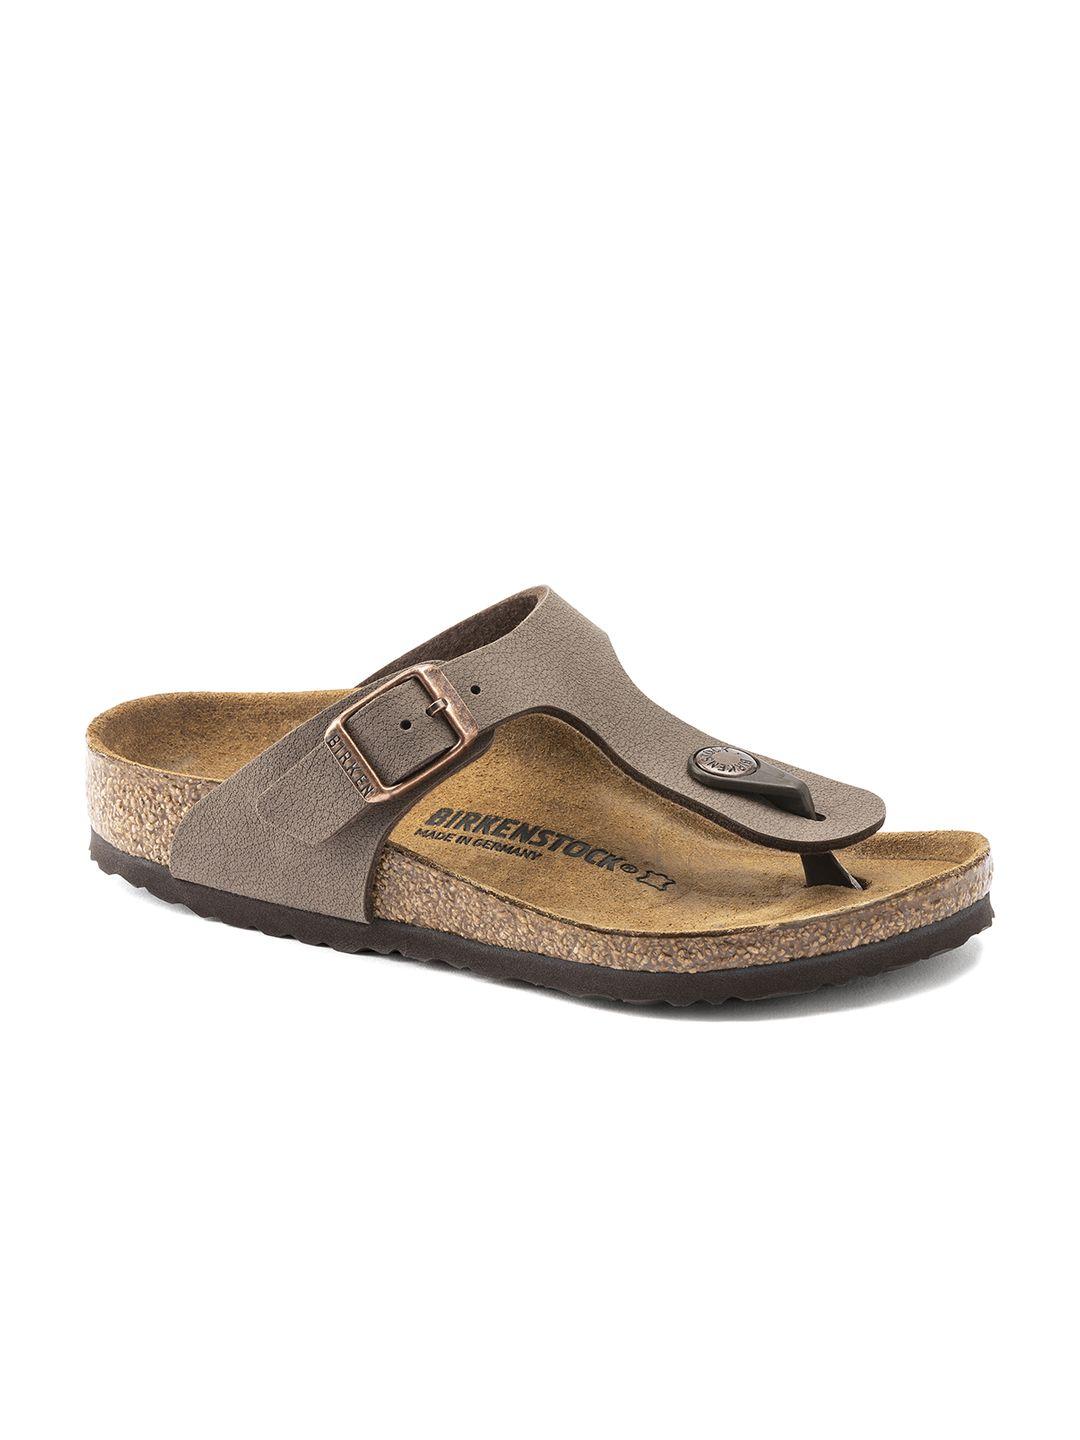 birkenstock-boys-brown-solid-nubuck-leather-narrow-width-gizeh-sandals